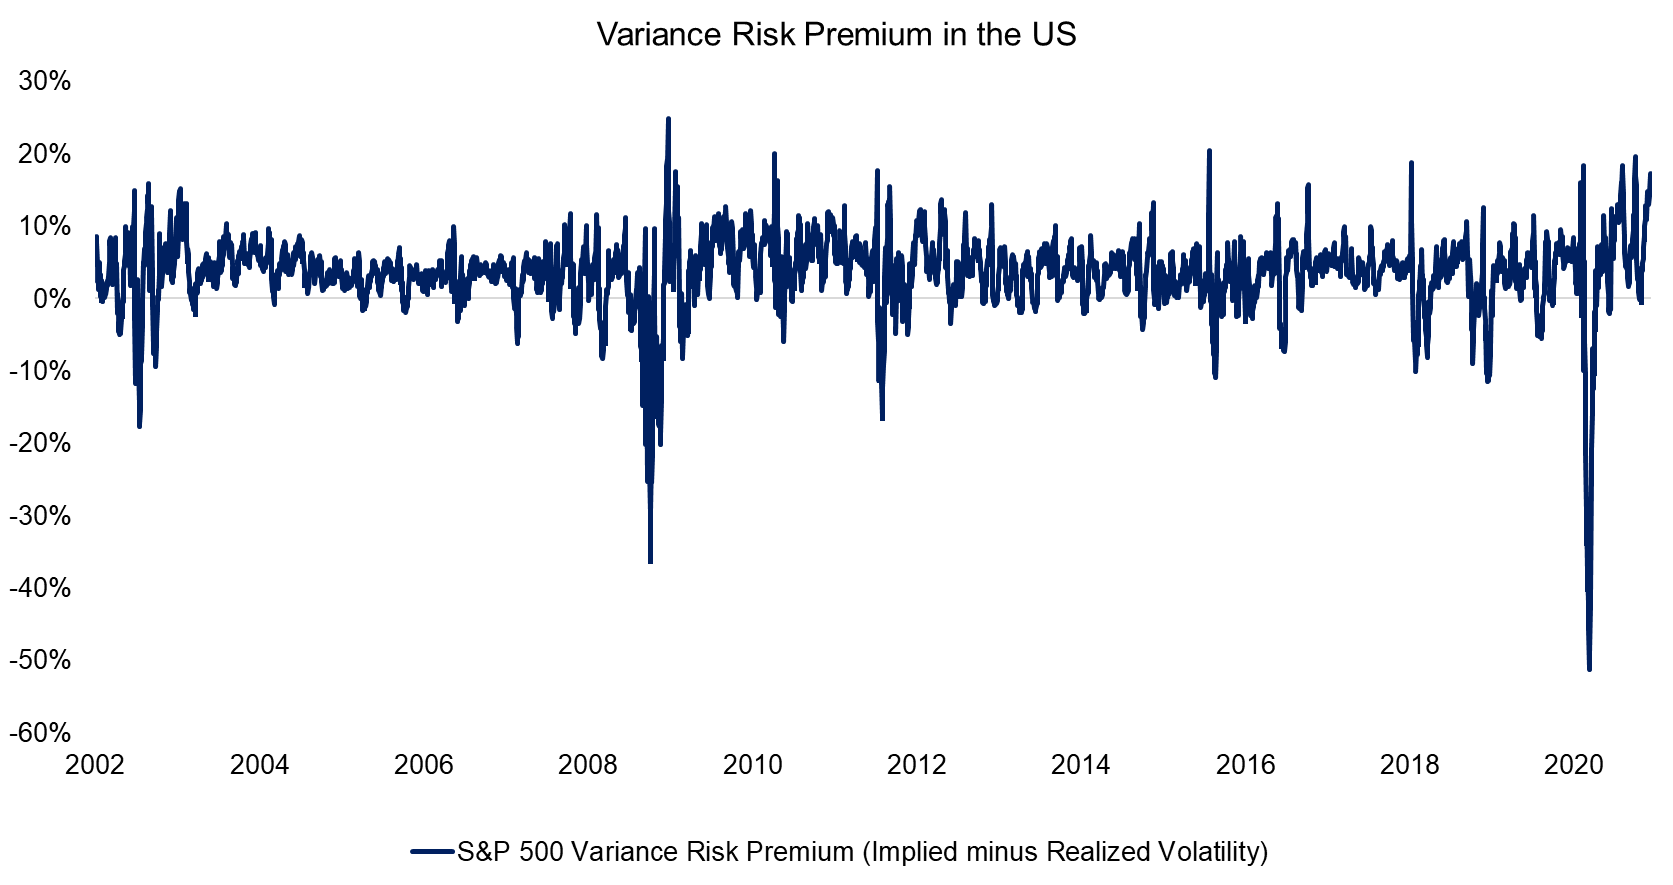 Variance Risk Premium in the US